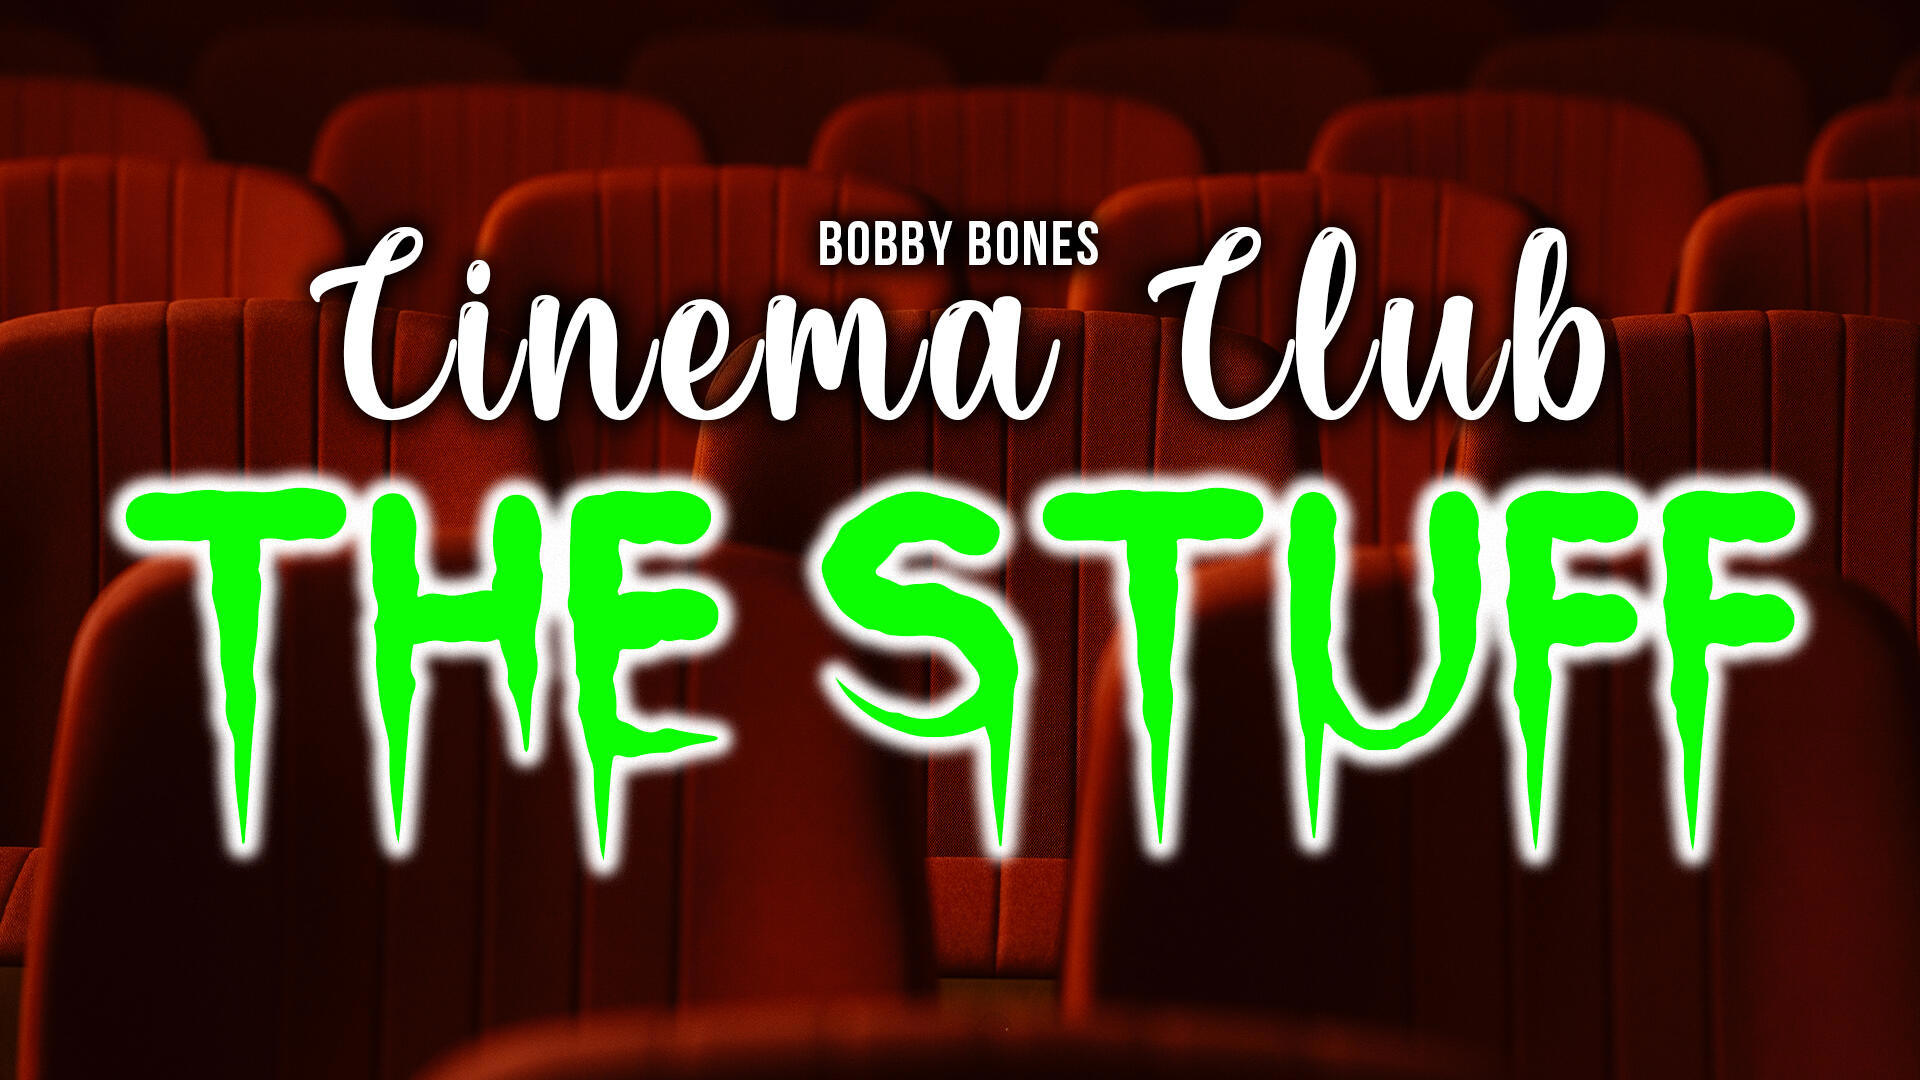 Bobby Bones Cinema Club Show Reviews ‘The Stuff’